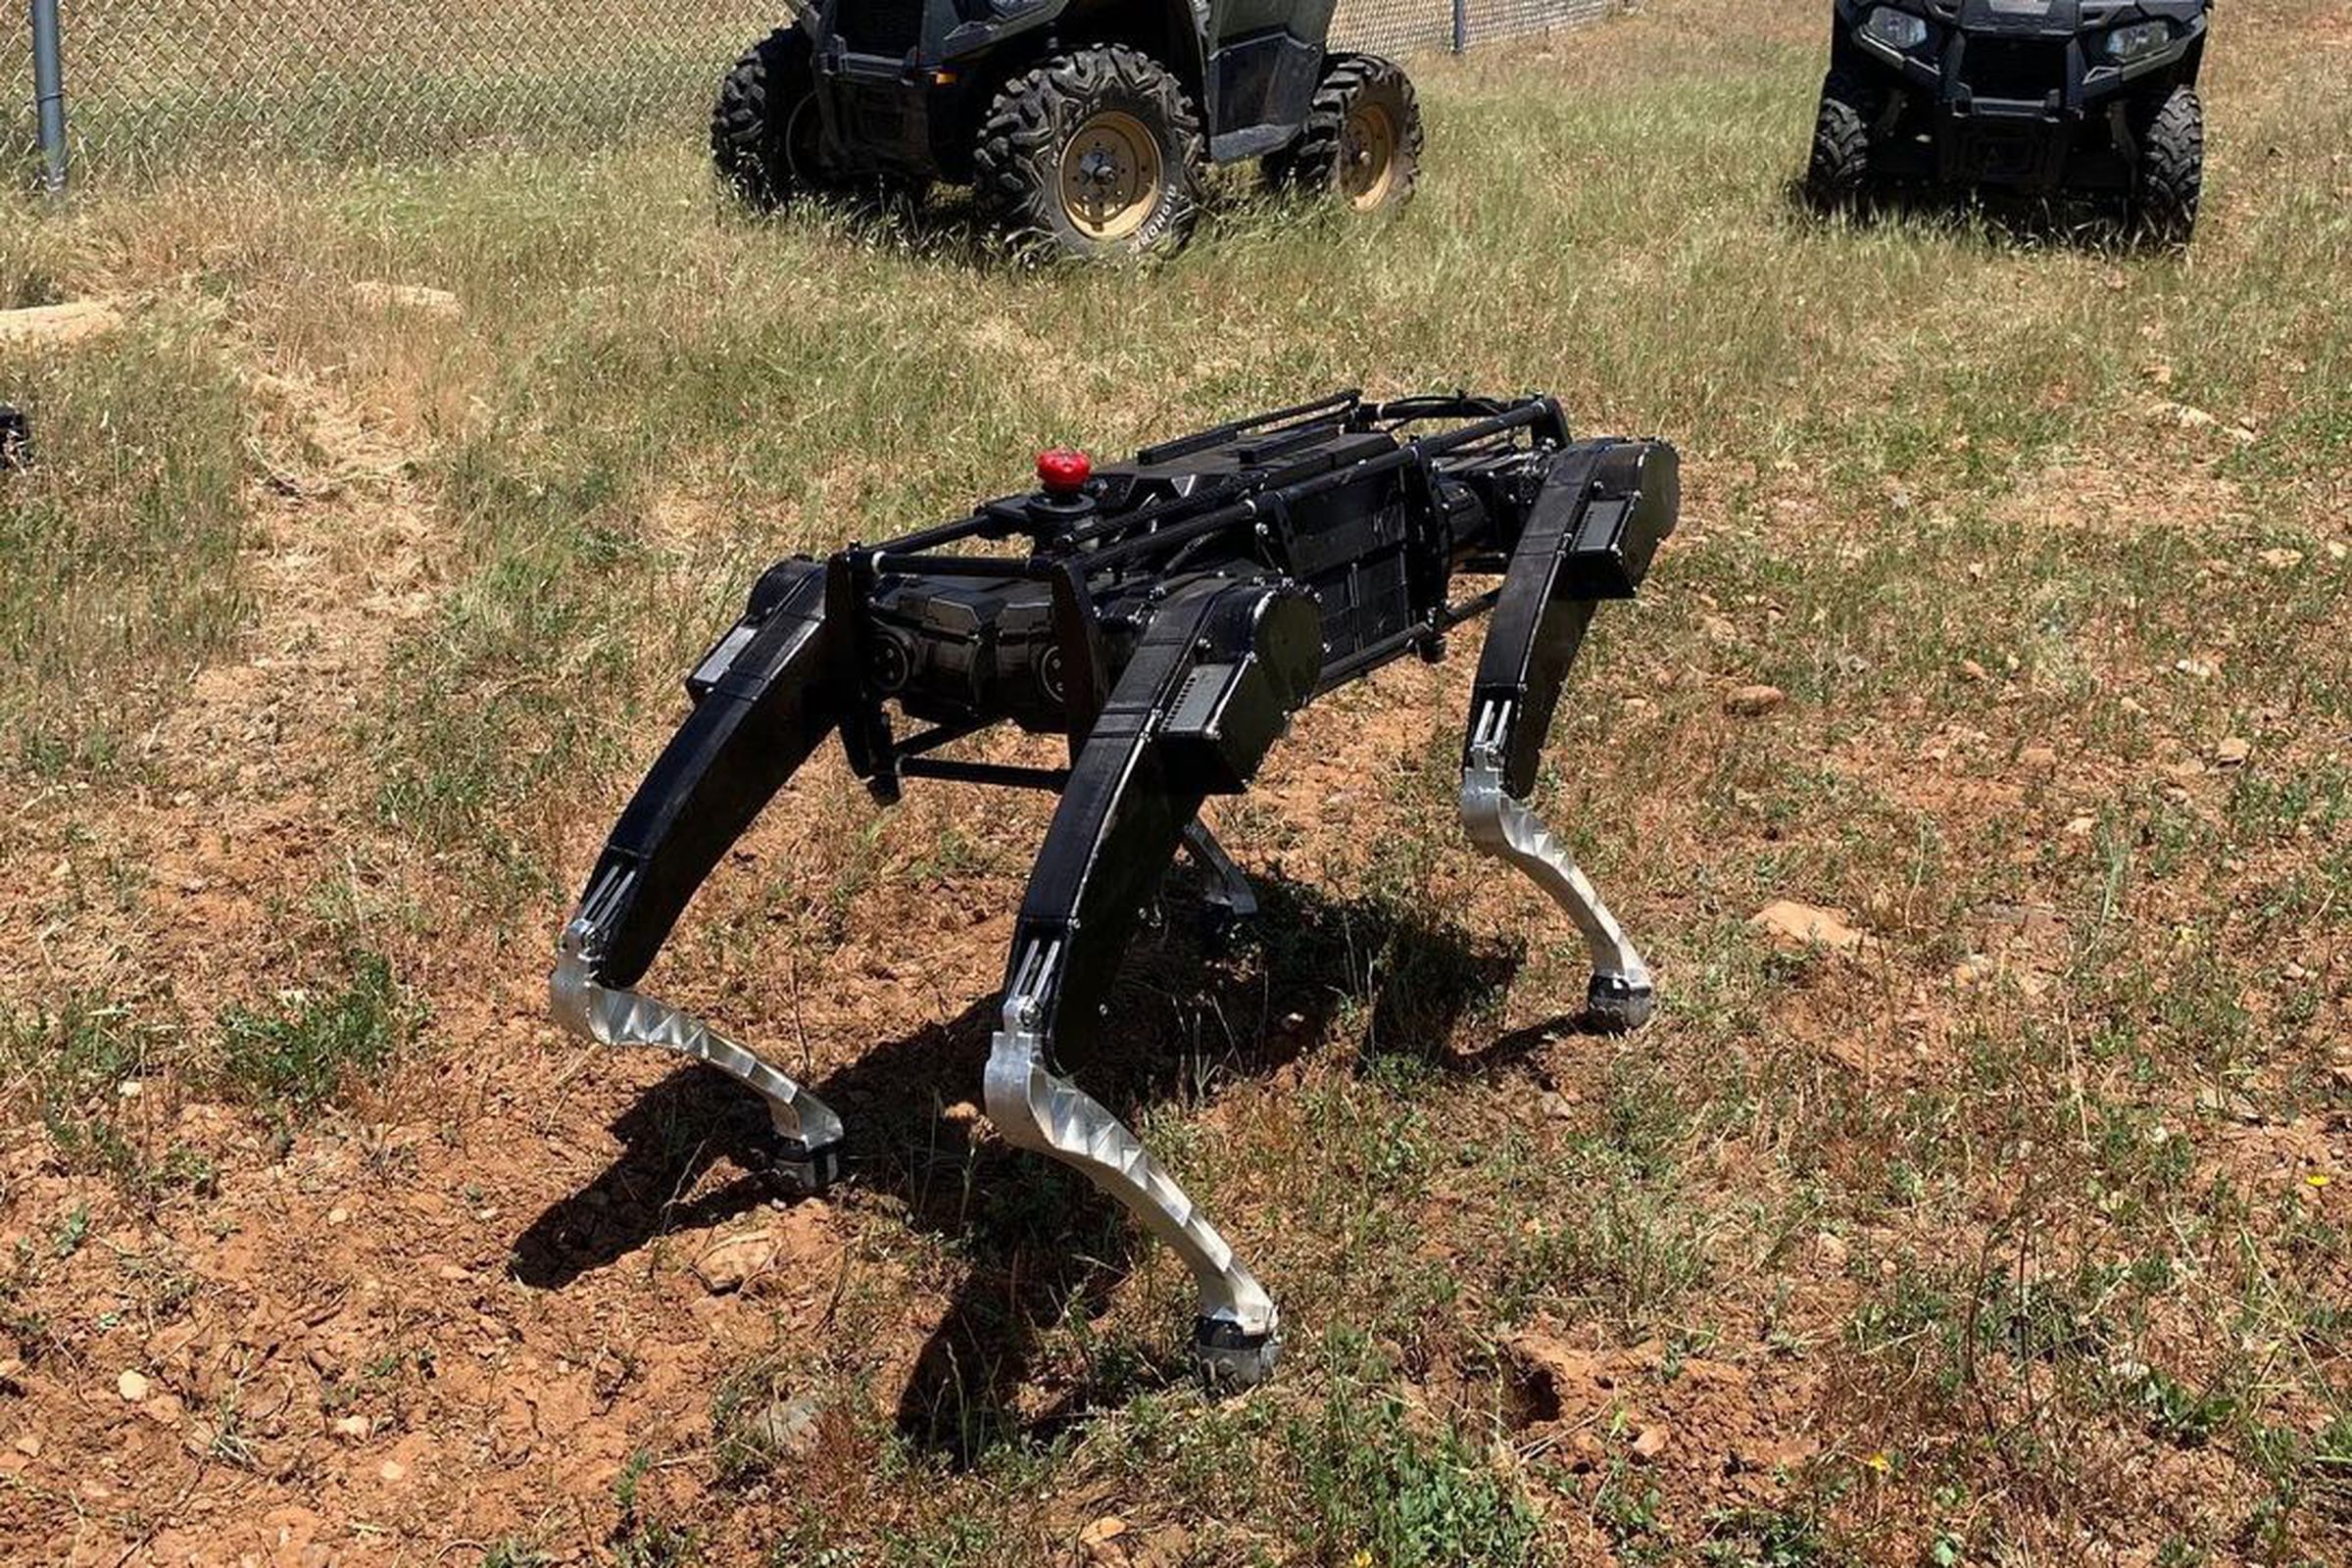 A Ghost Robotics quadruped posing alongside ATVs in the southwest US. 